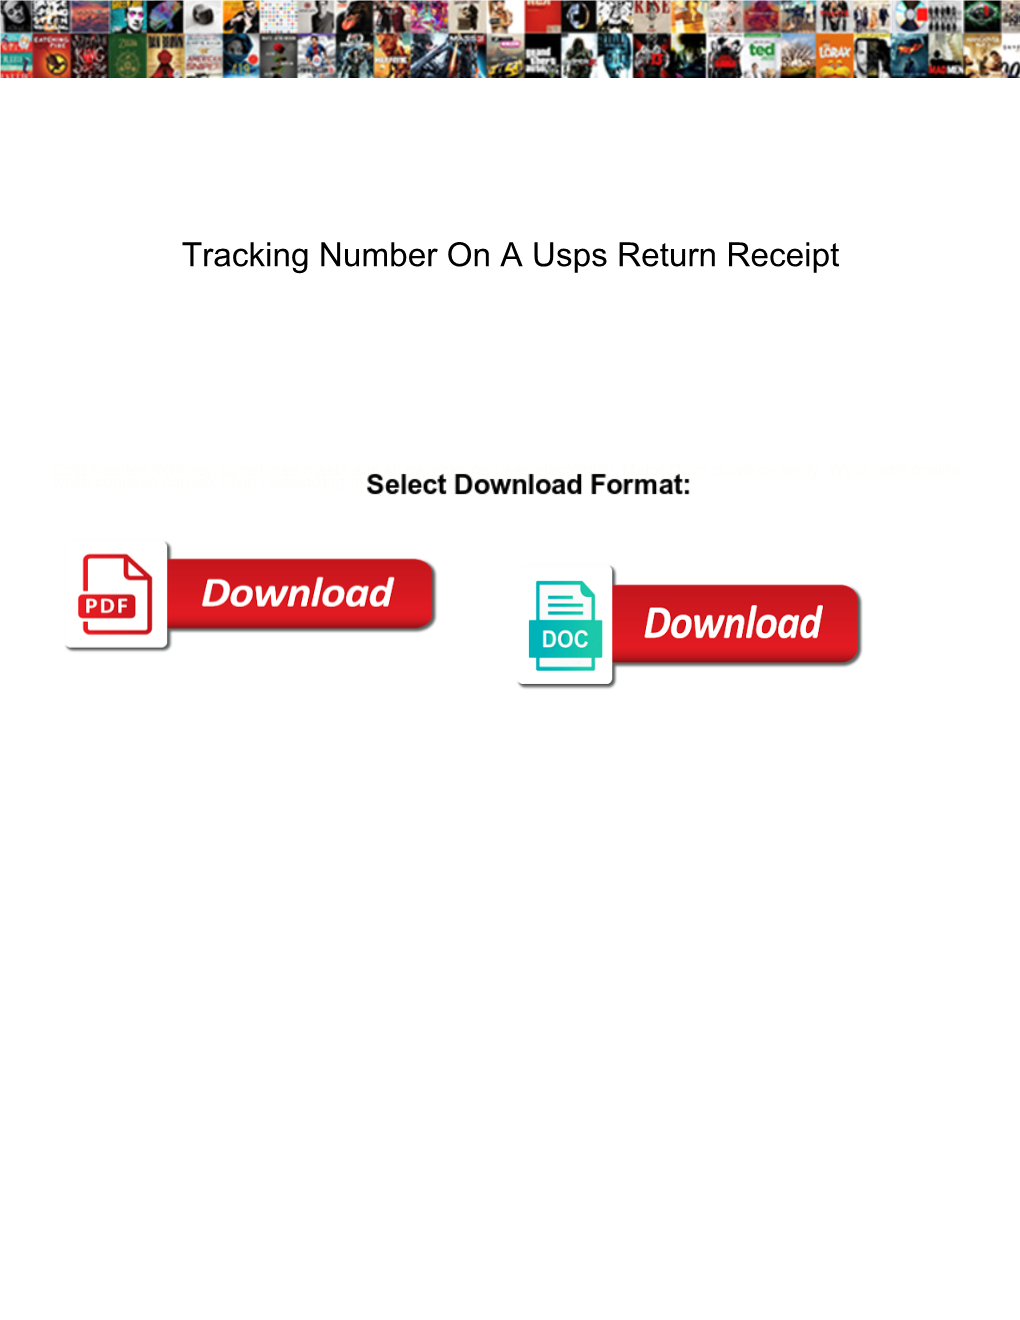 Tracking Number on a Usps Return Receipt